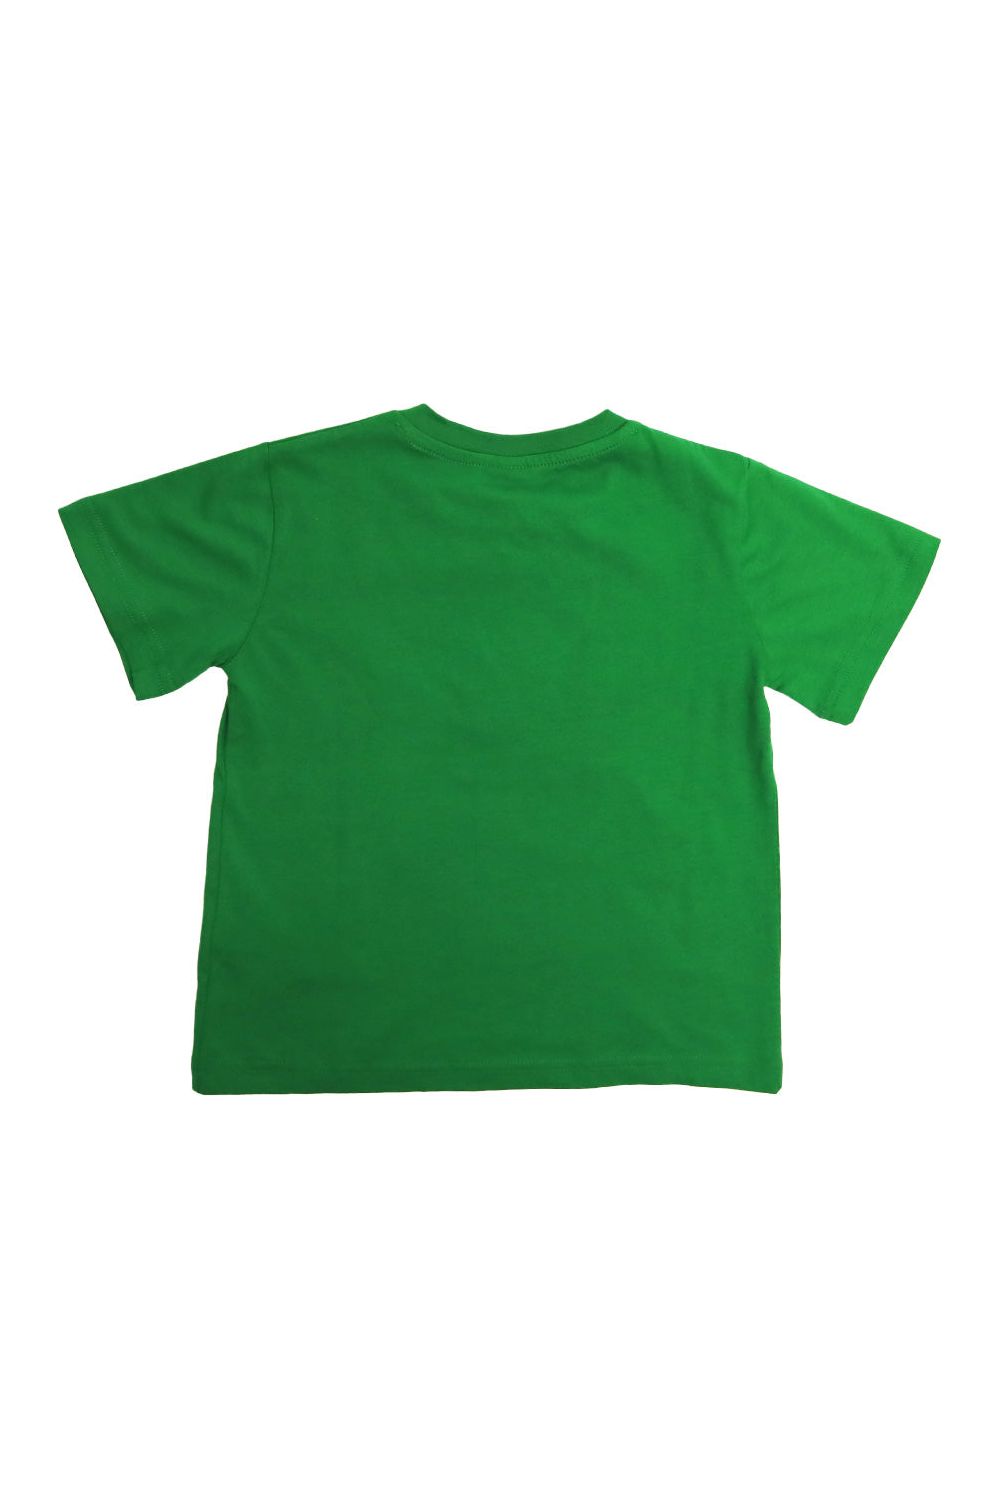 Tiki Man Youth Short Sleeve T-Shirt Kelly Green